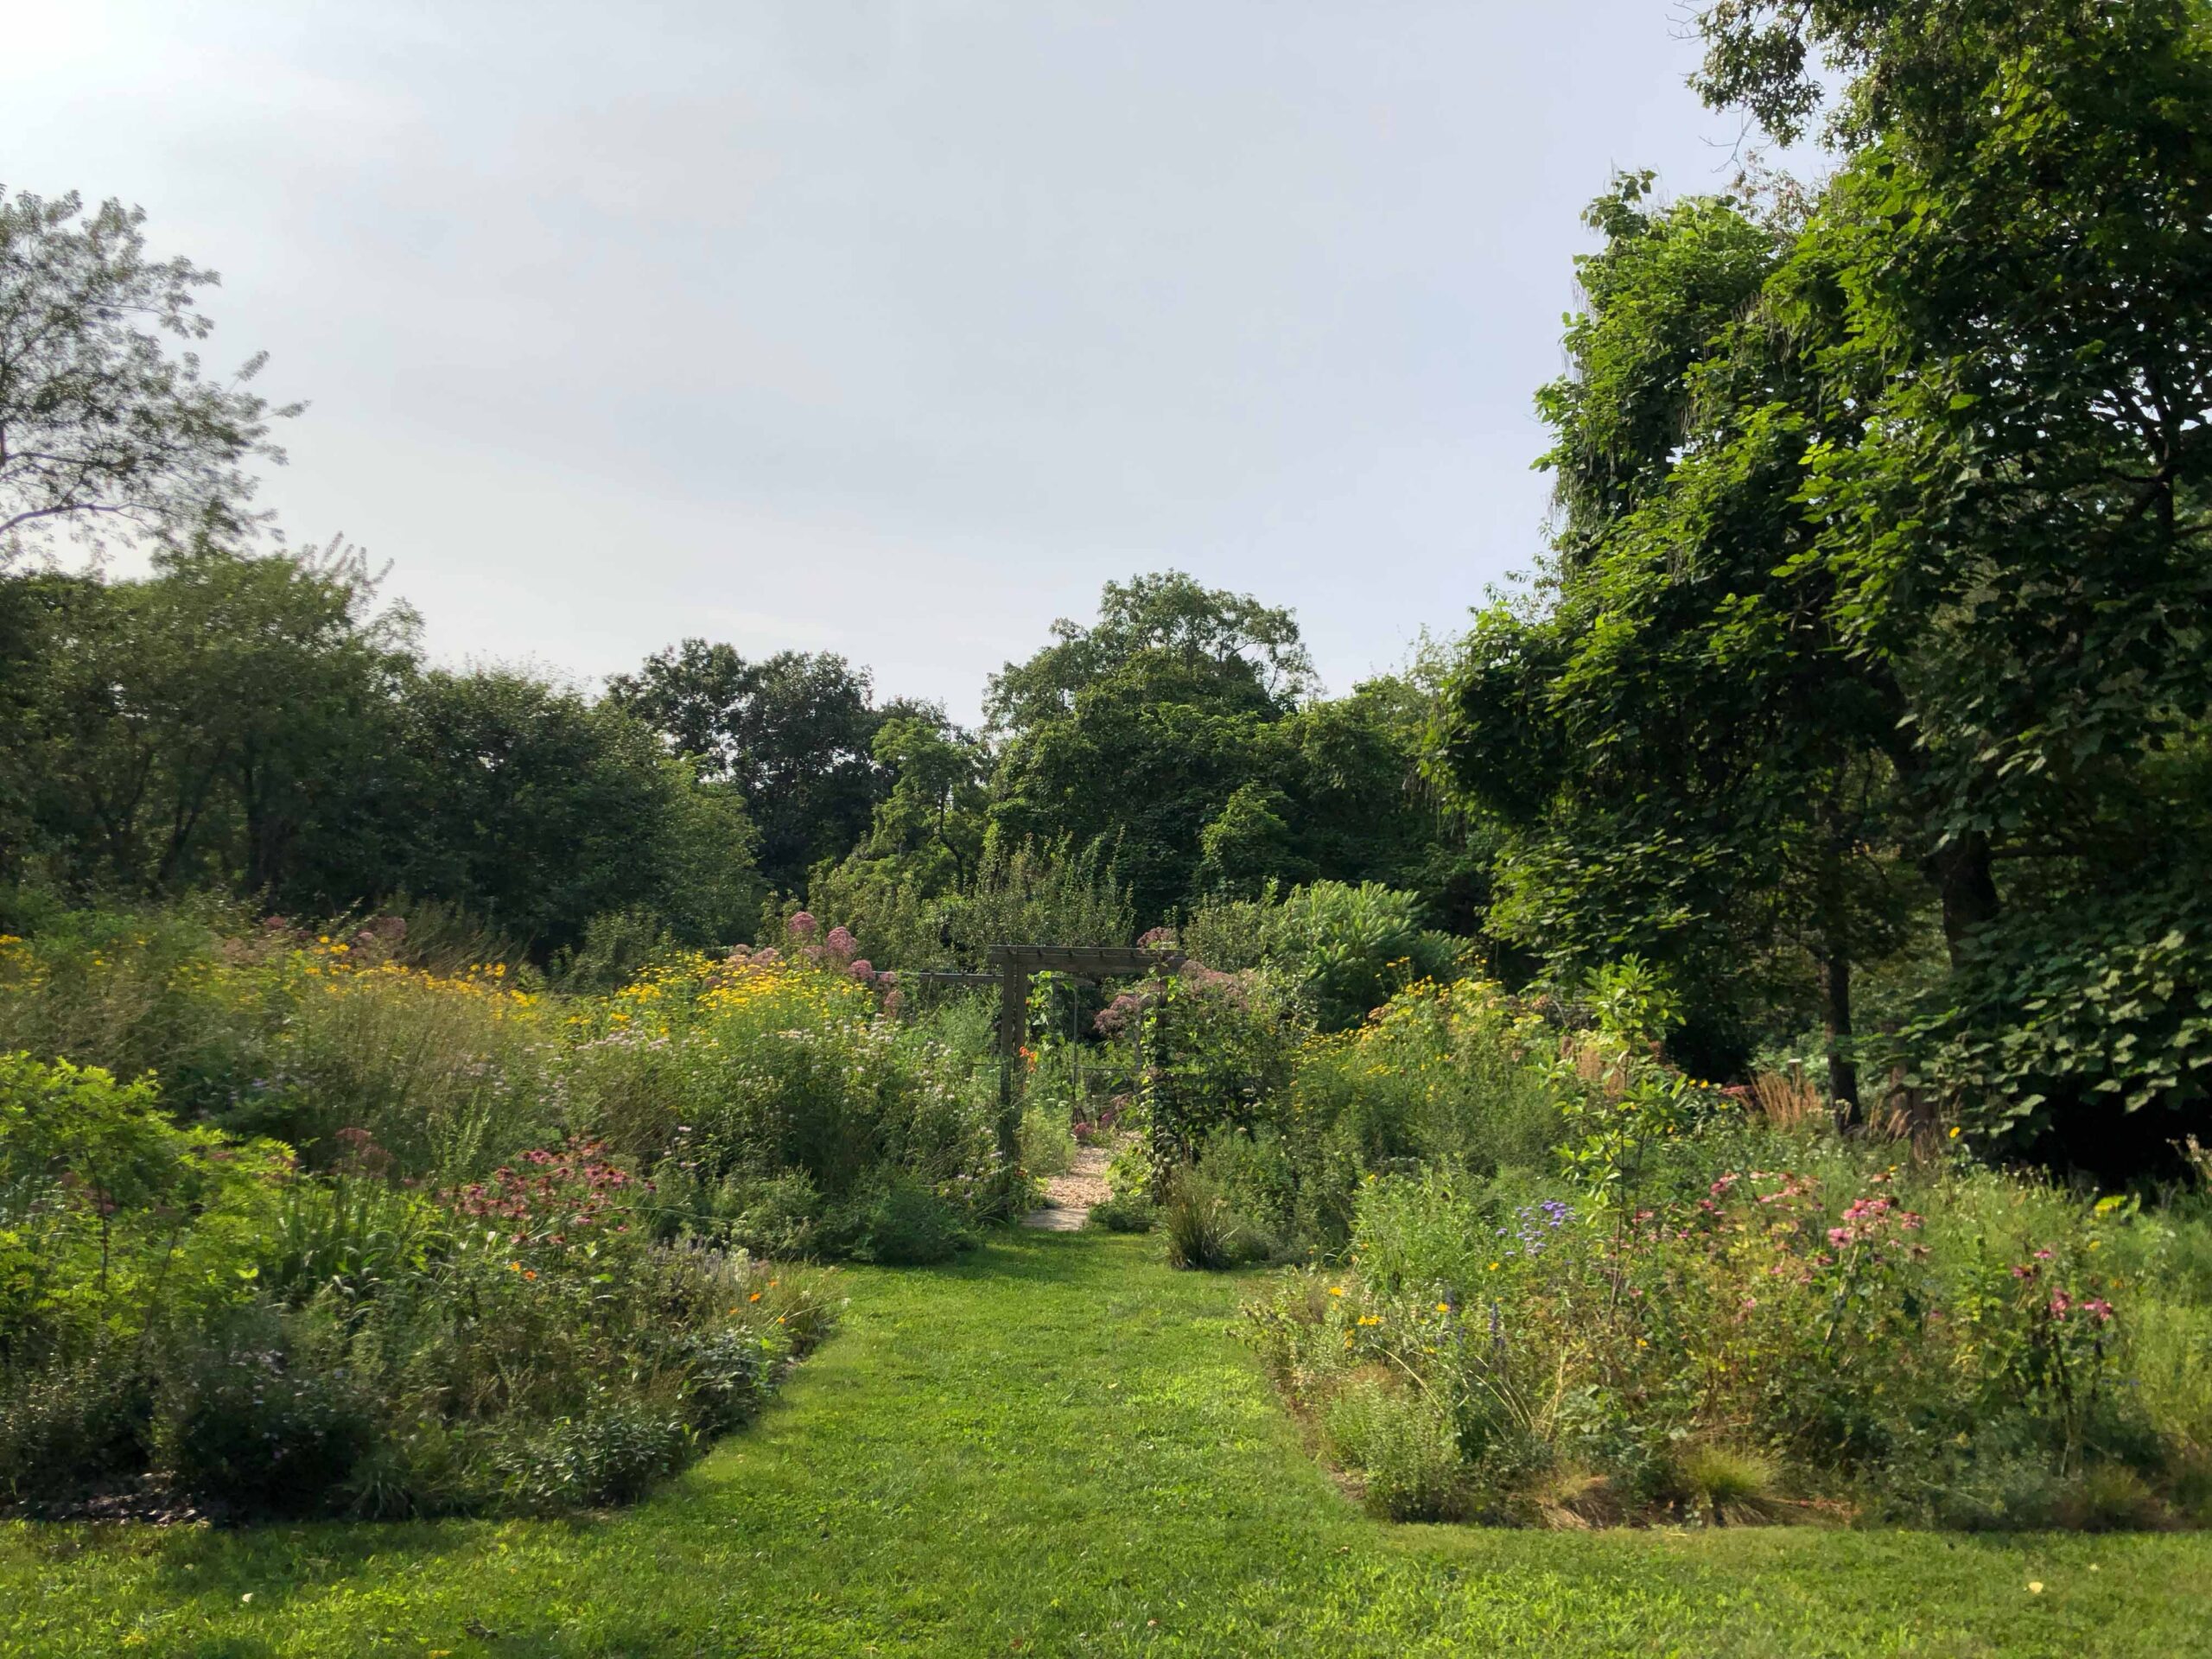 Edwina von Gal's Toxic-free garden